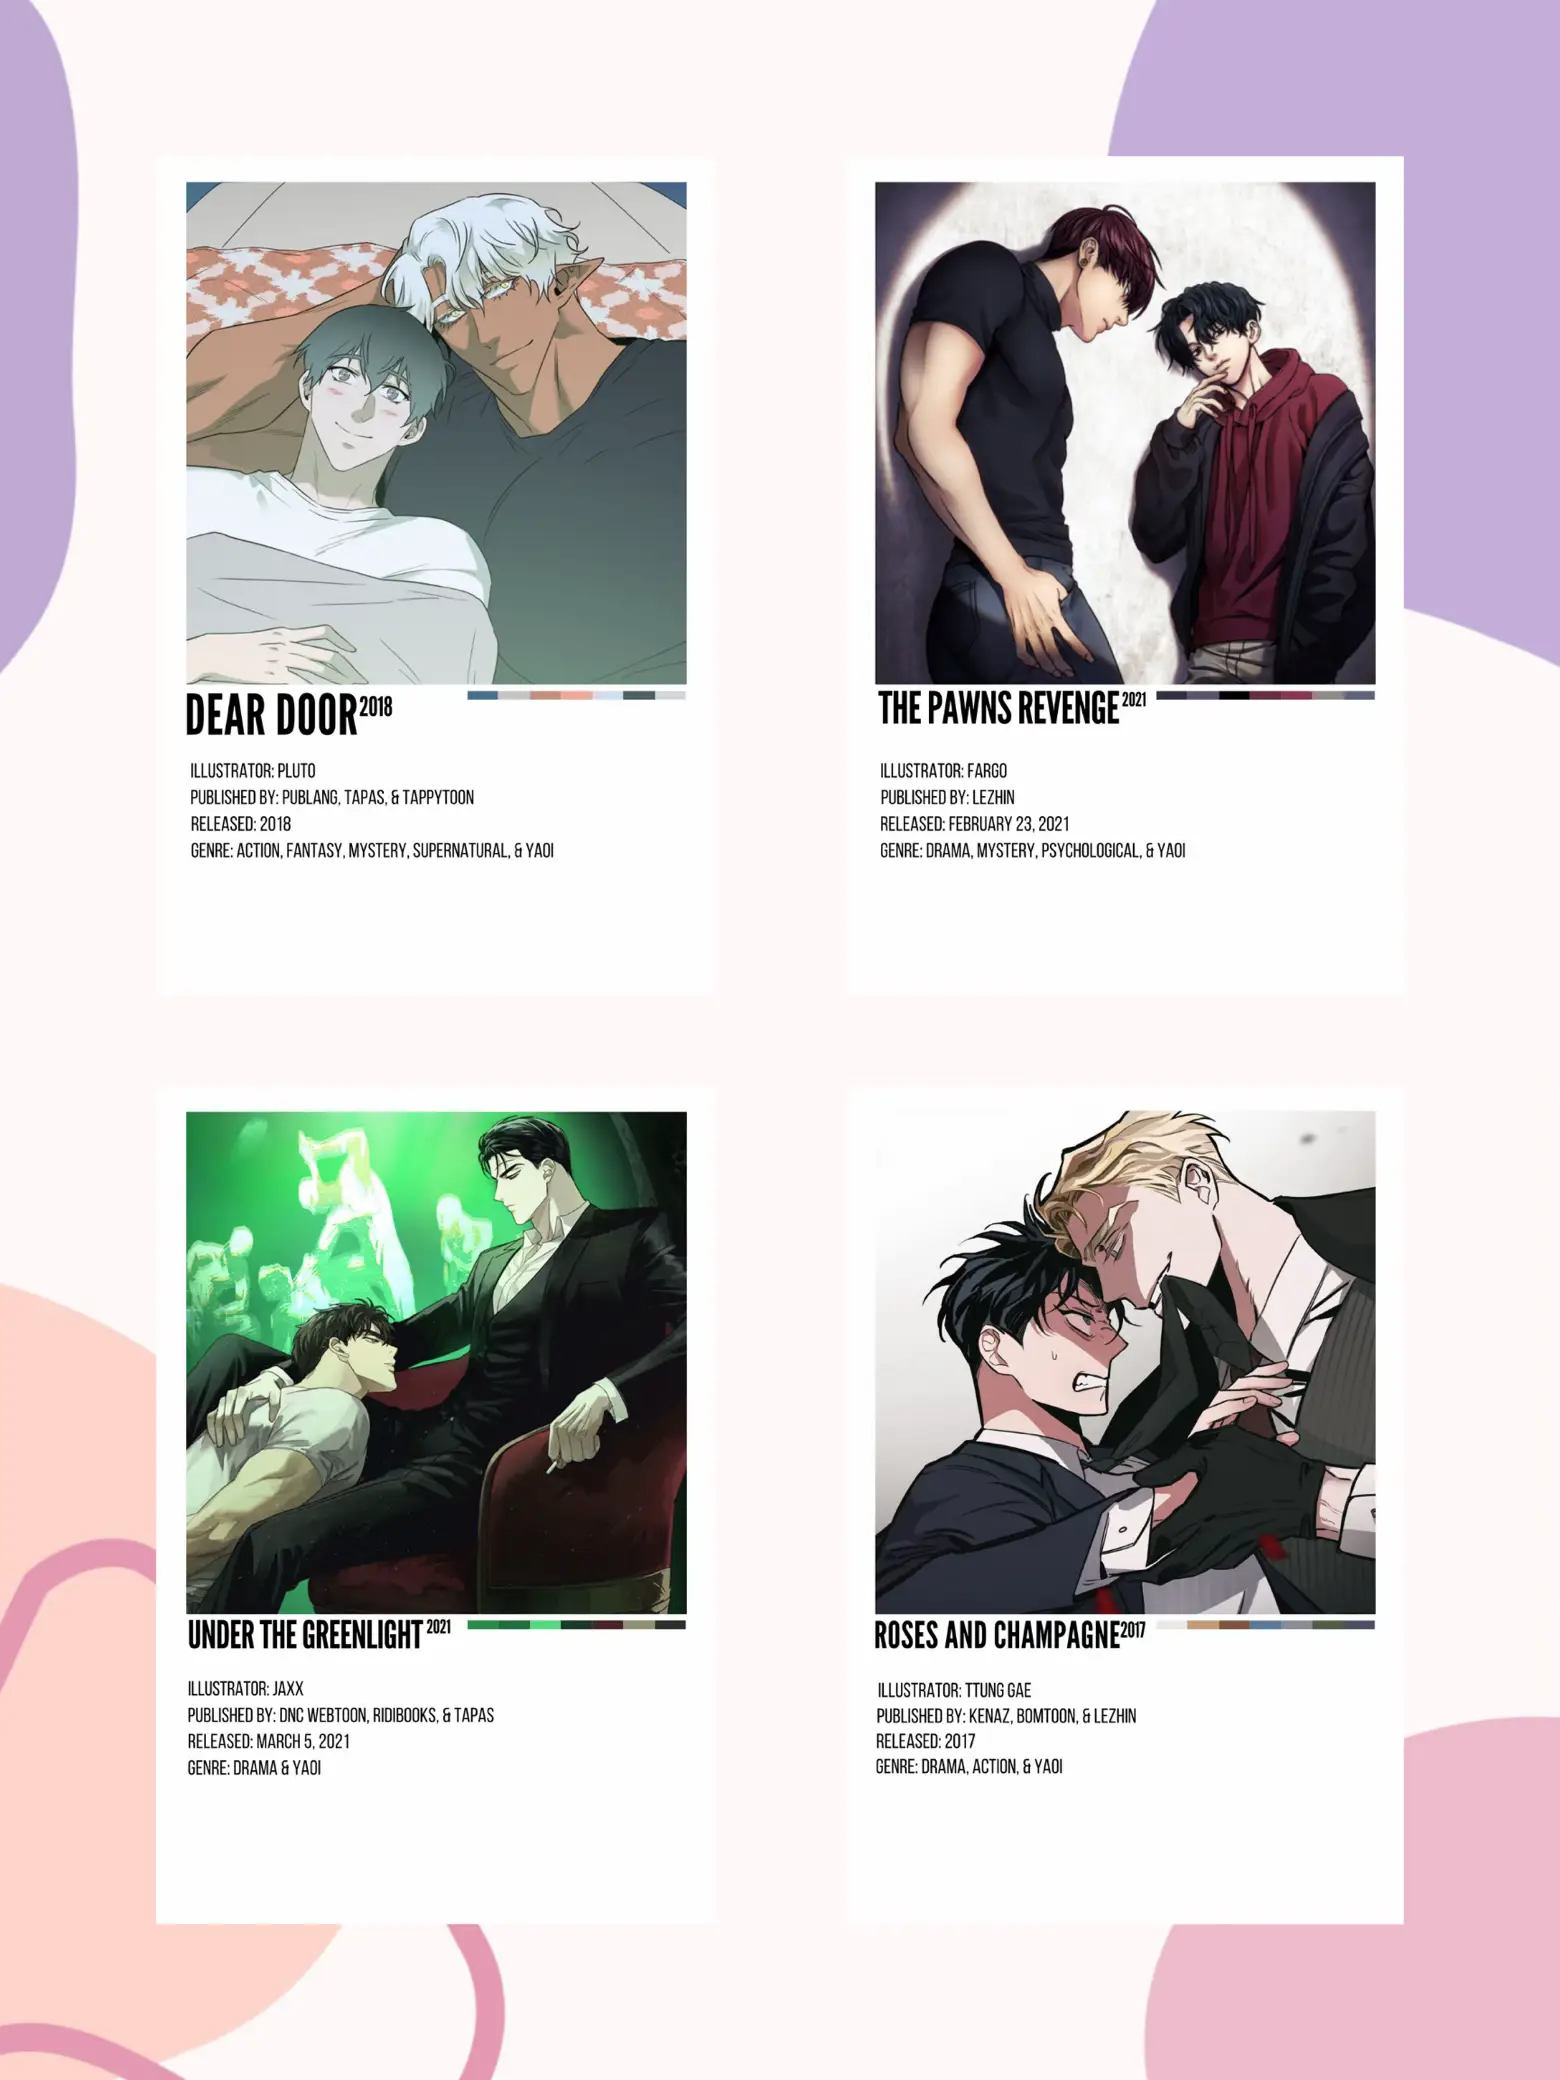 aesthetic wall decor  minimalist anime posters, b&w vintage collage, manga  panels, vines & more 